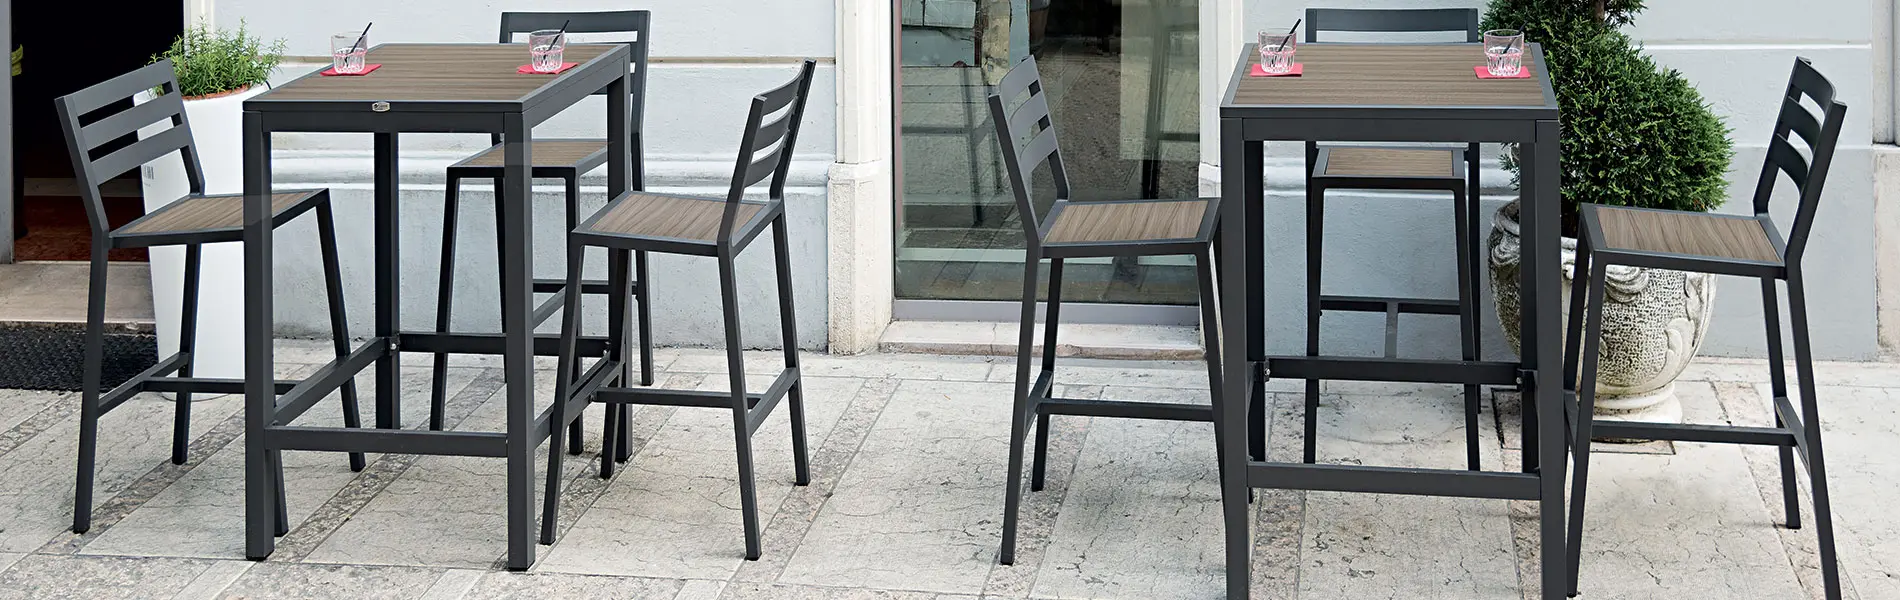 Outdoor bar stools